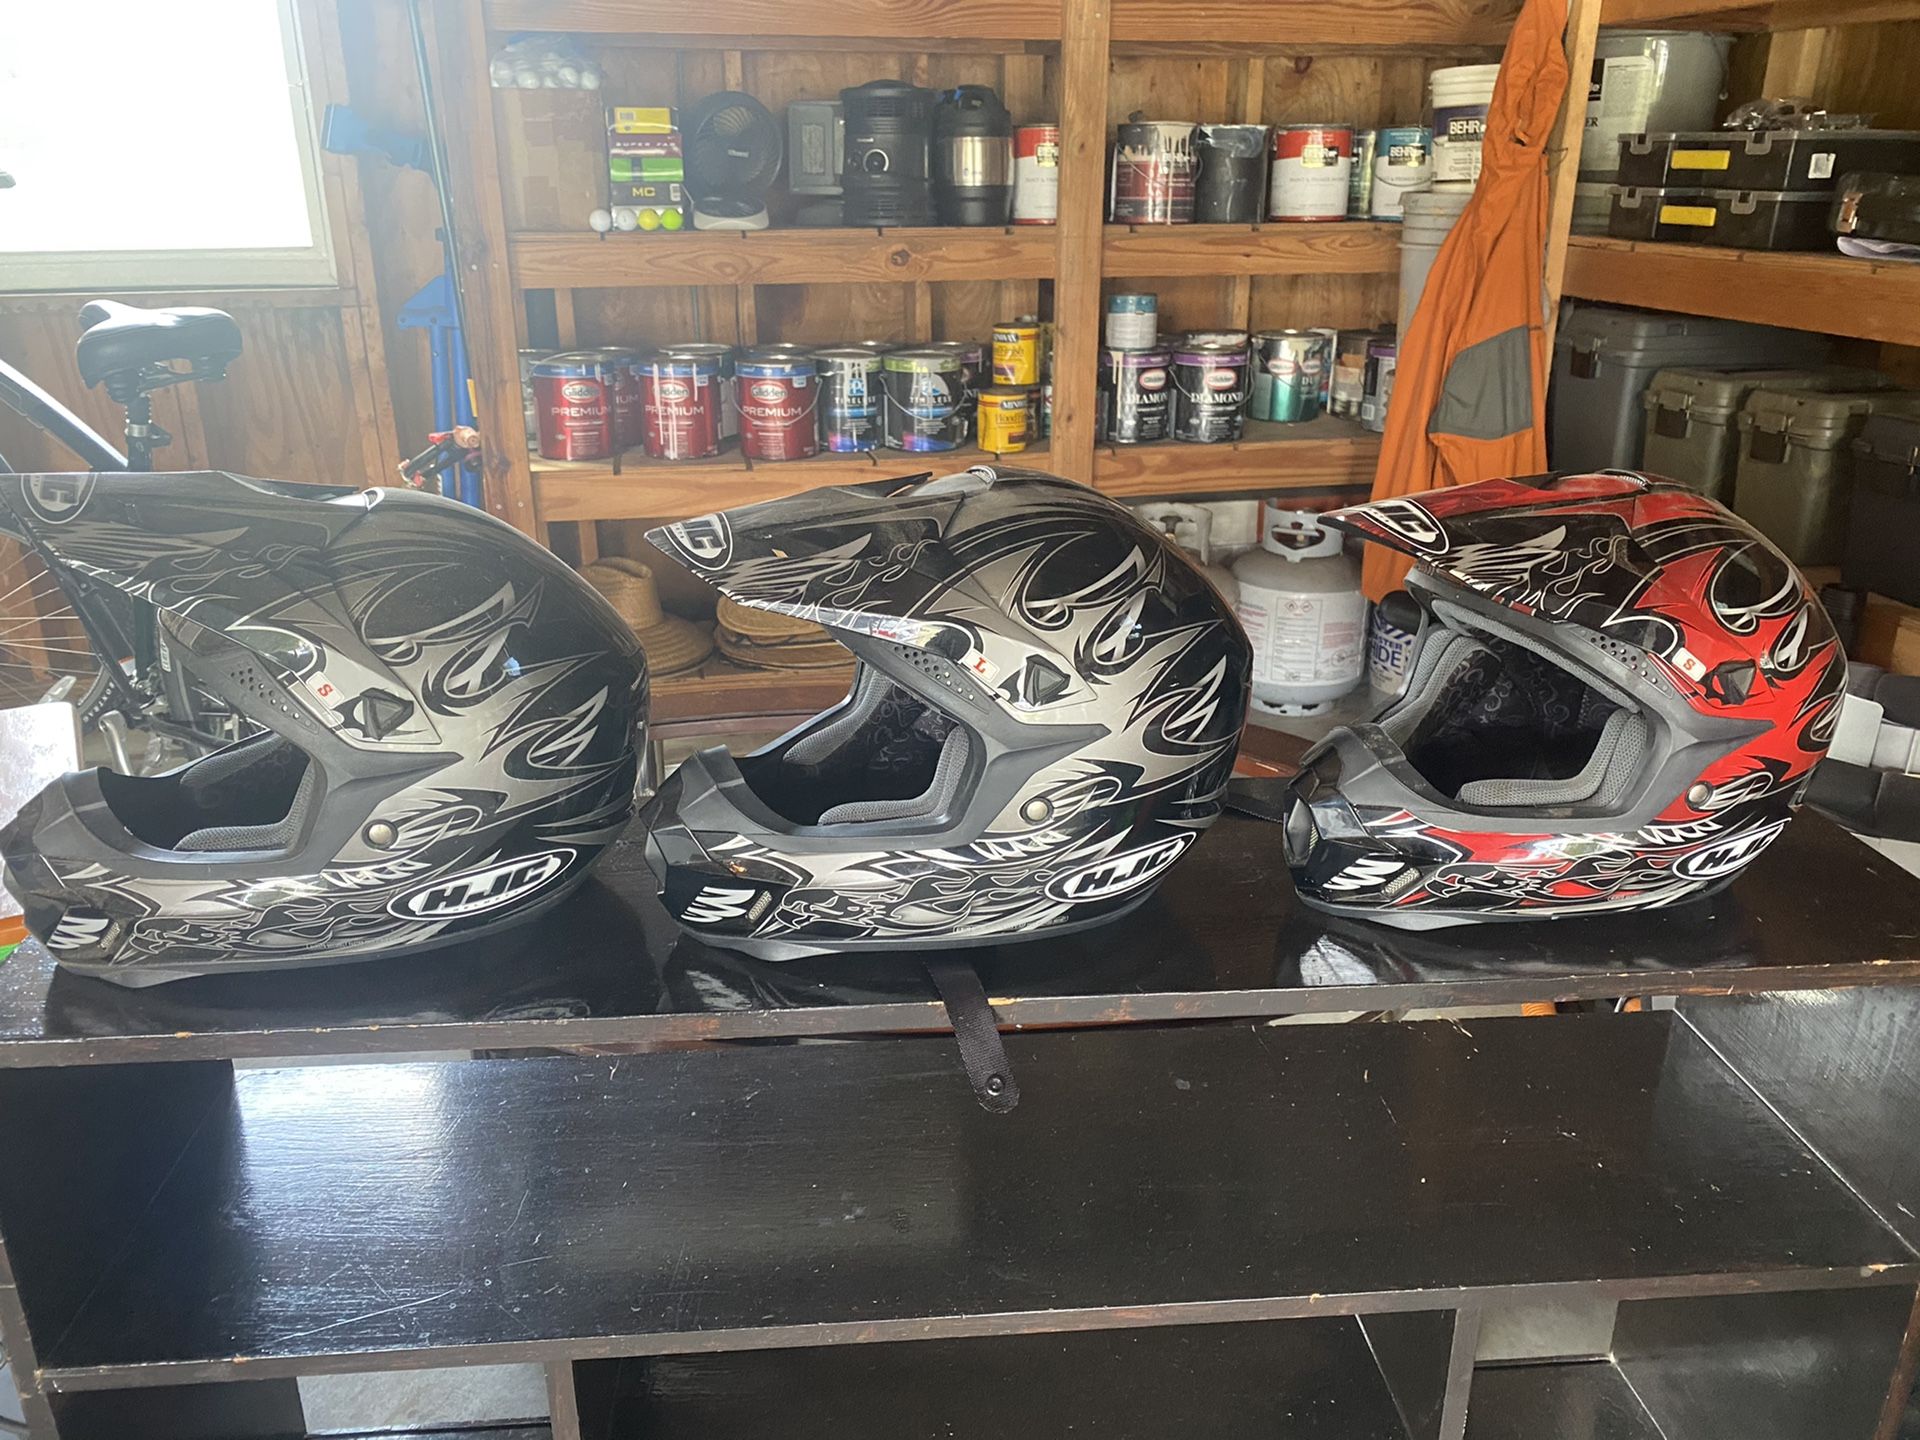 Motorcycle helmets, HJC